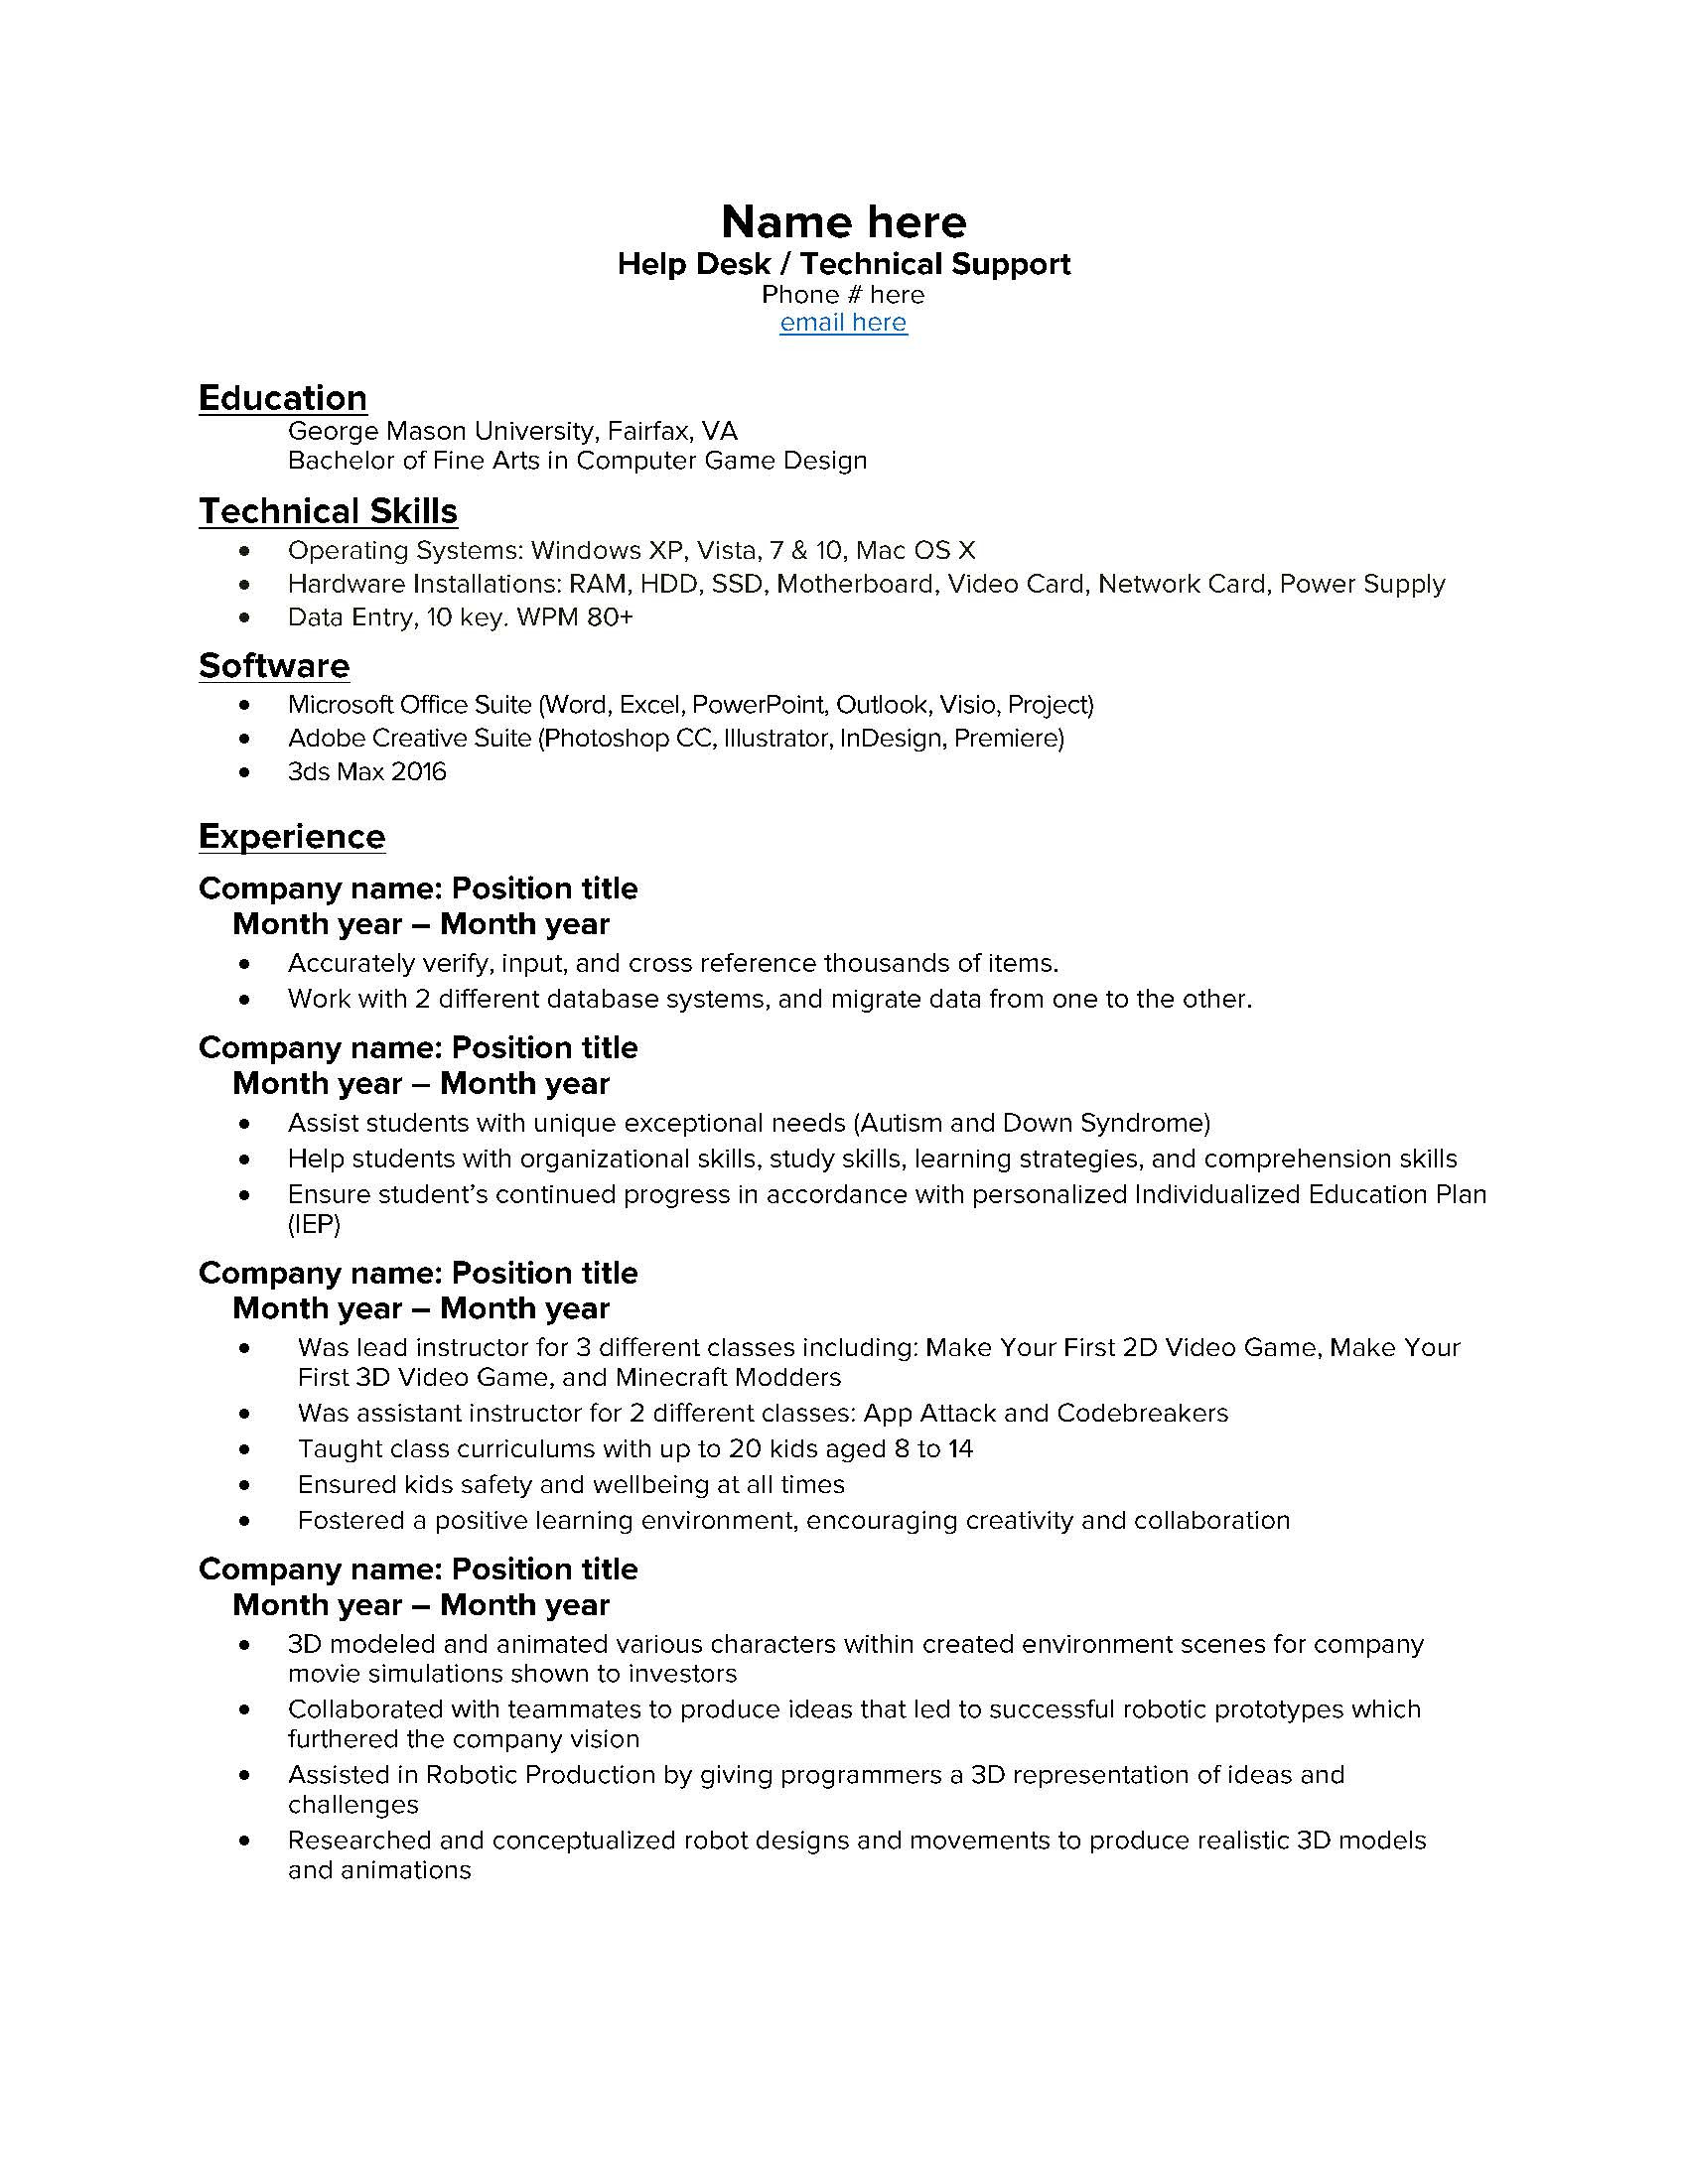 Sample Resume Heldesk Tier One No Experience Entry Level Help Desk Resume : R/resumes